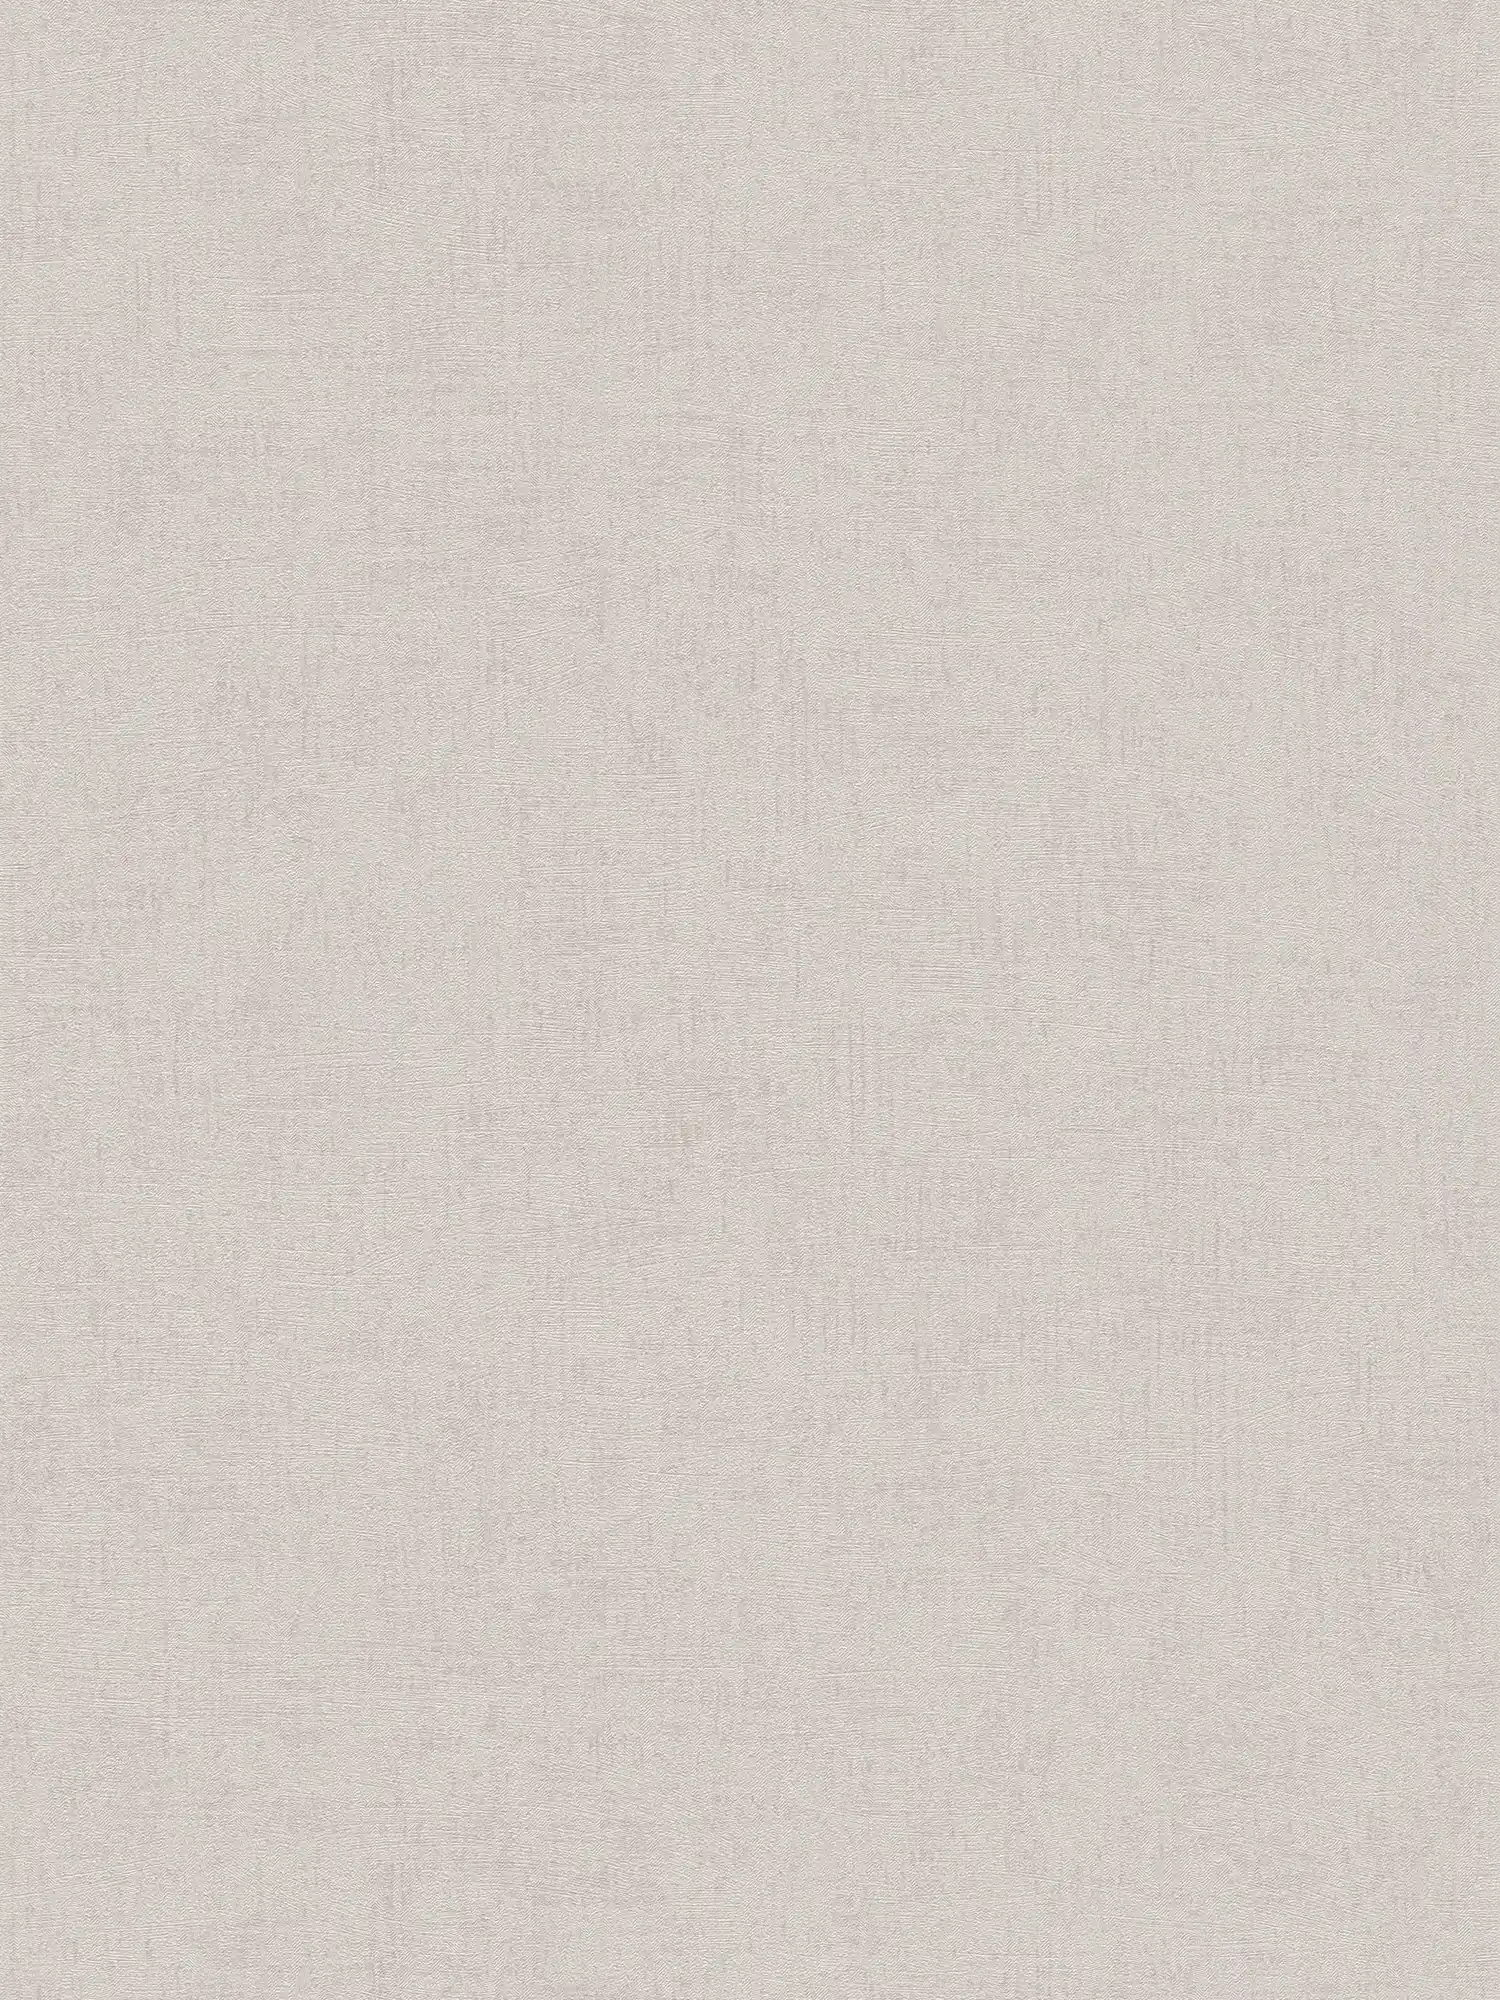 Pearl white wallpaper with metallic effect, plain & textured - beige, cream, metallic
